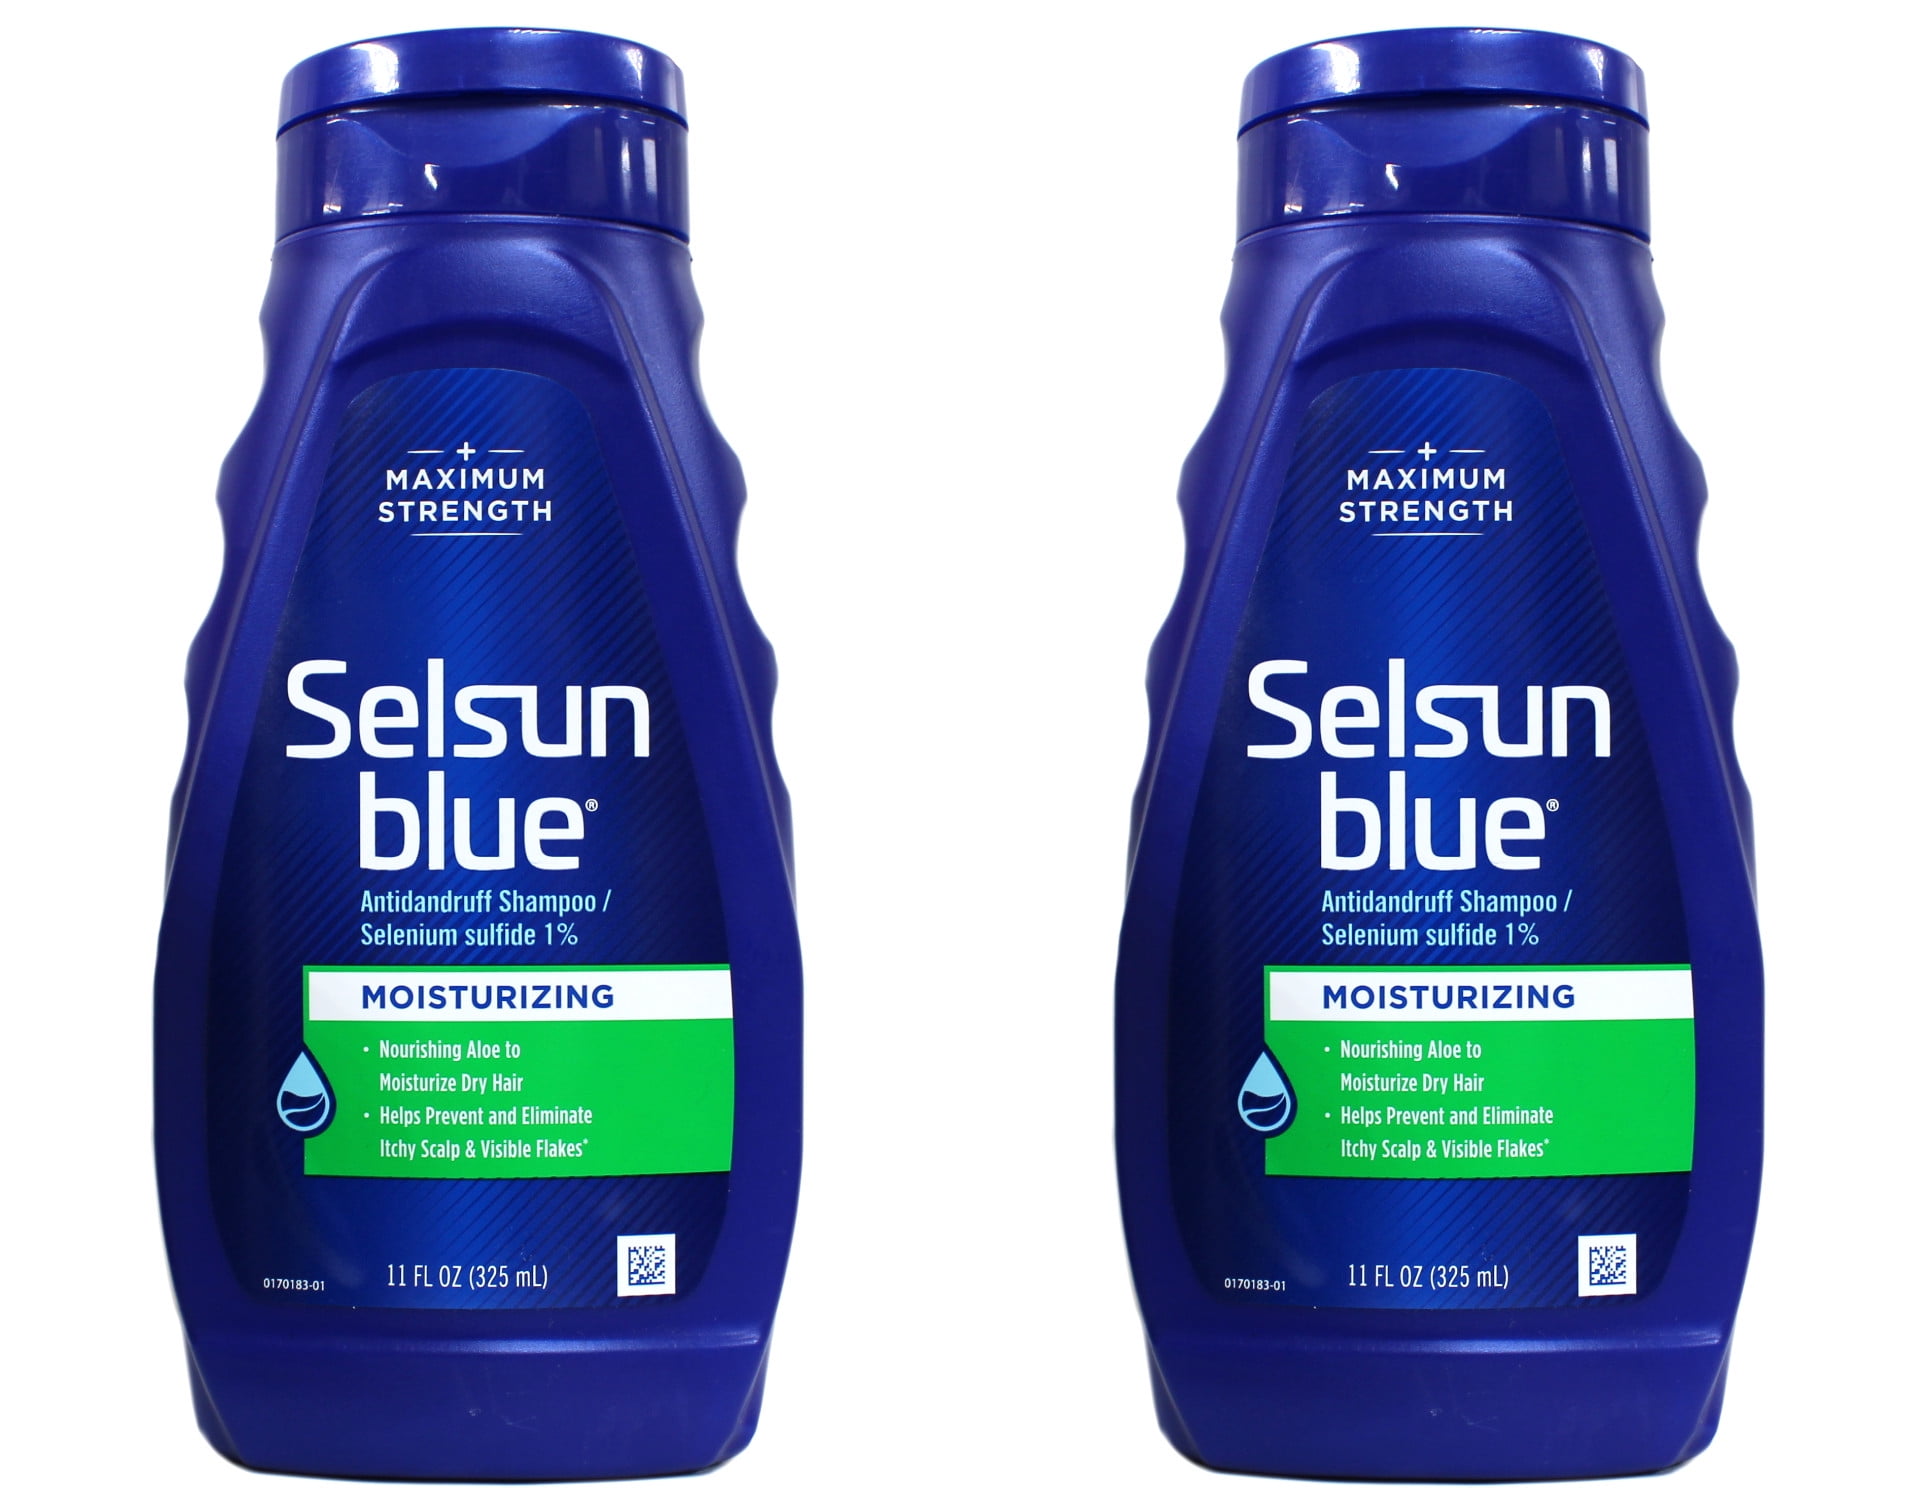 Selsun Blue Moisturizing Dandruff Shampoo - wide 3